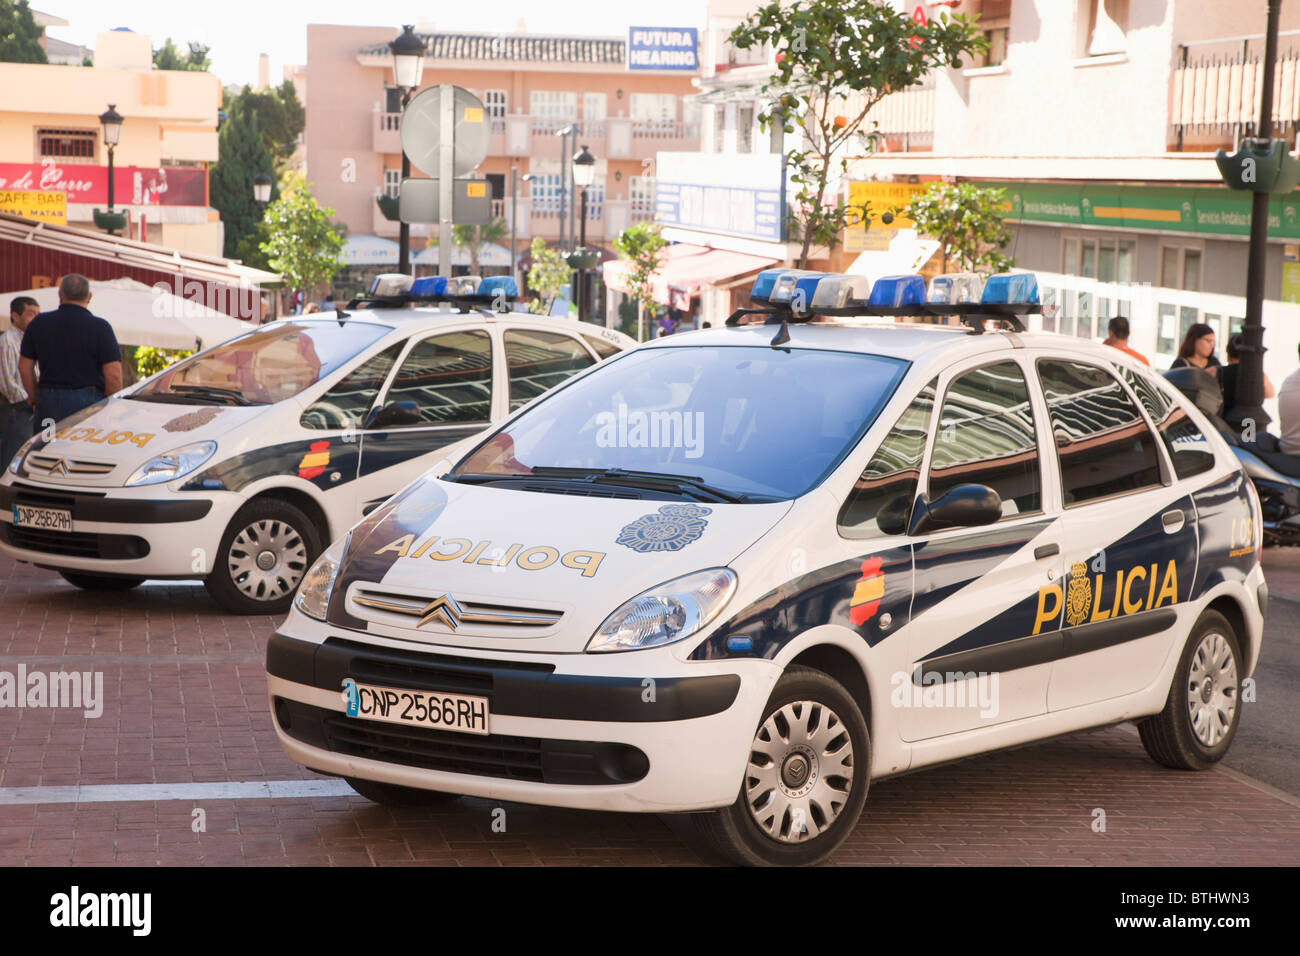 Policia Nacional cars in Arroyo de la Miel, Malaga province, Spain. National Police cars. Stock Photo